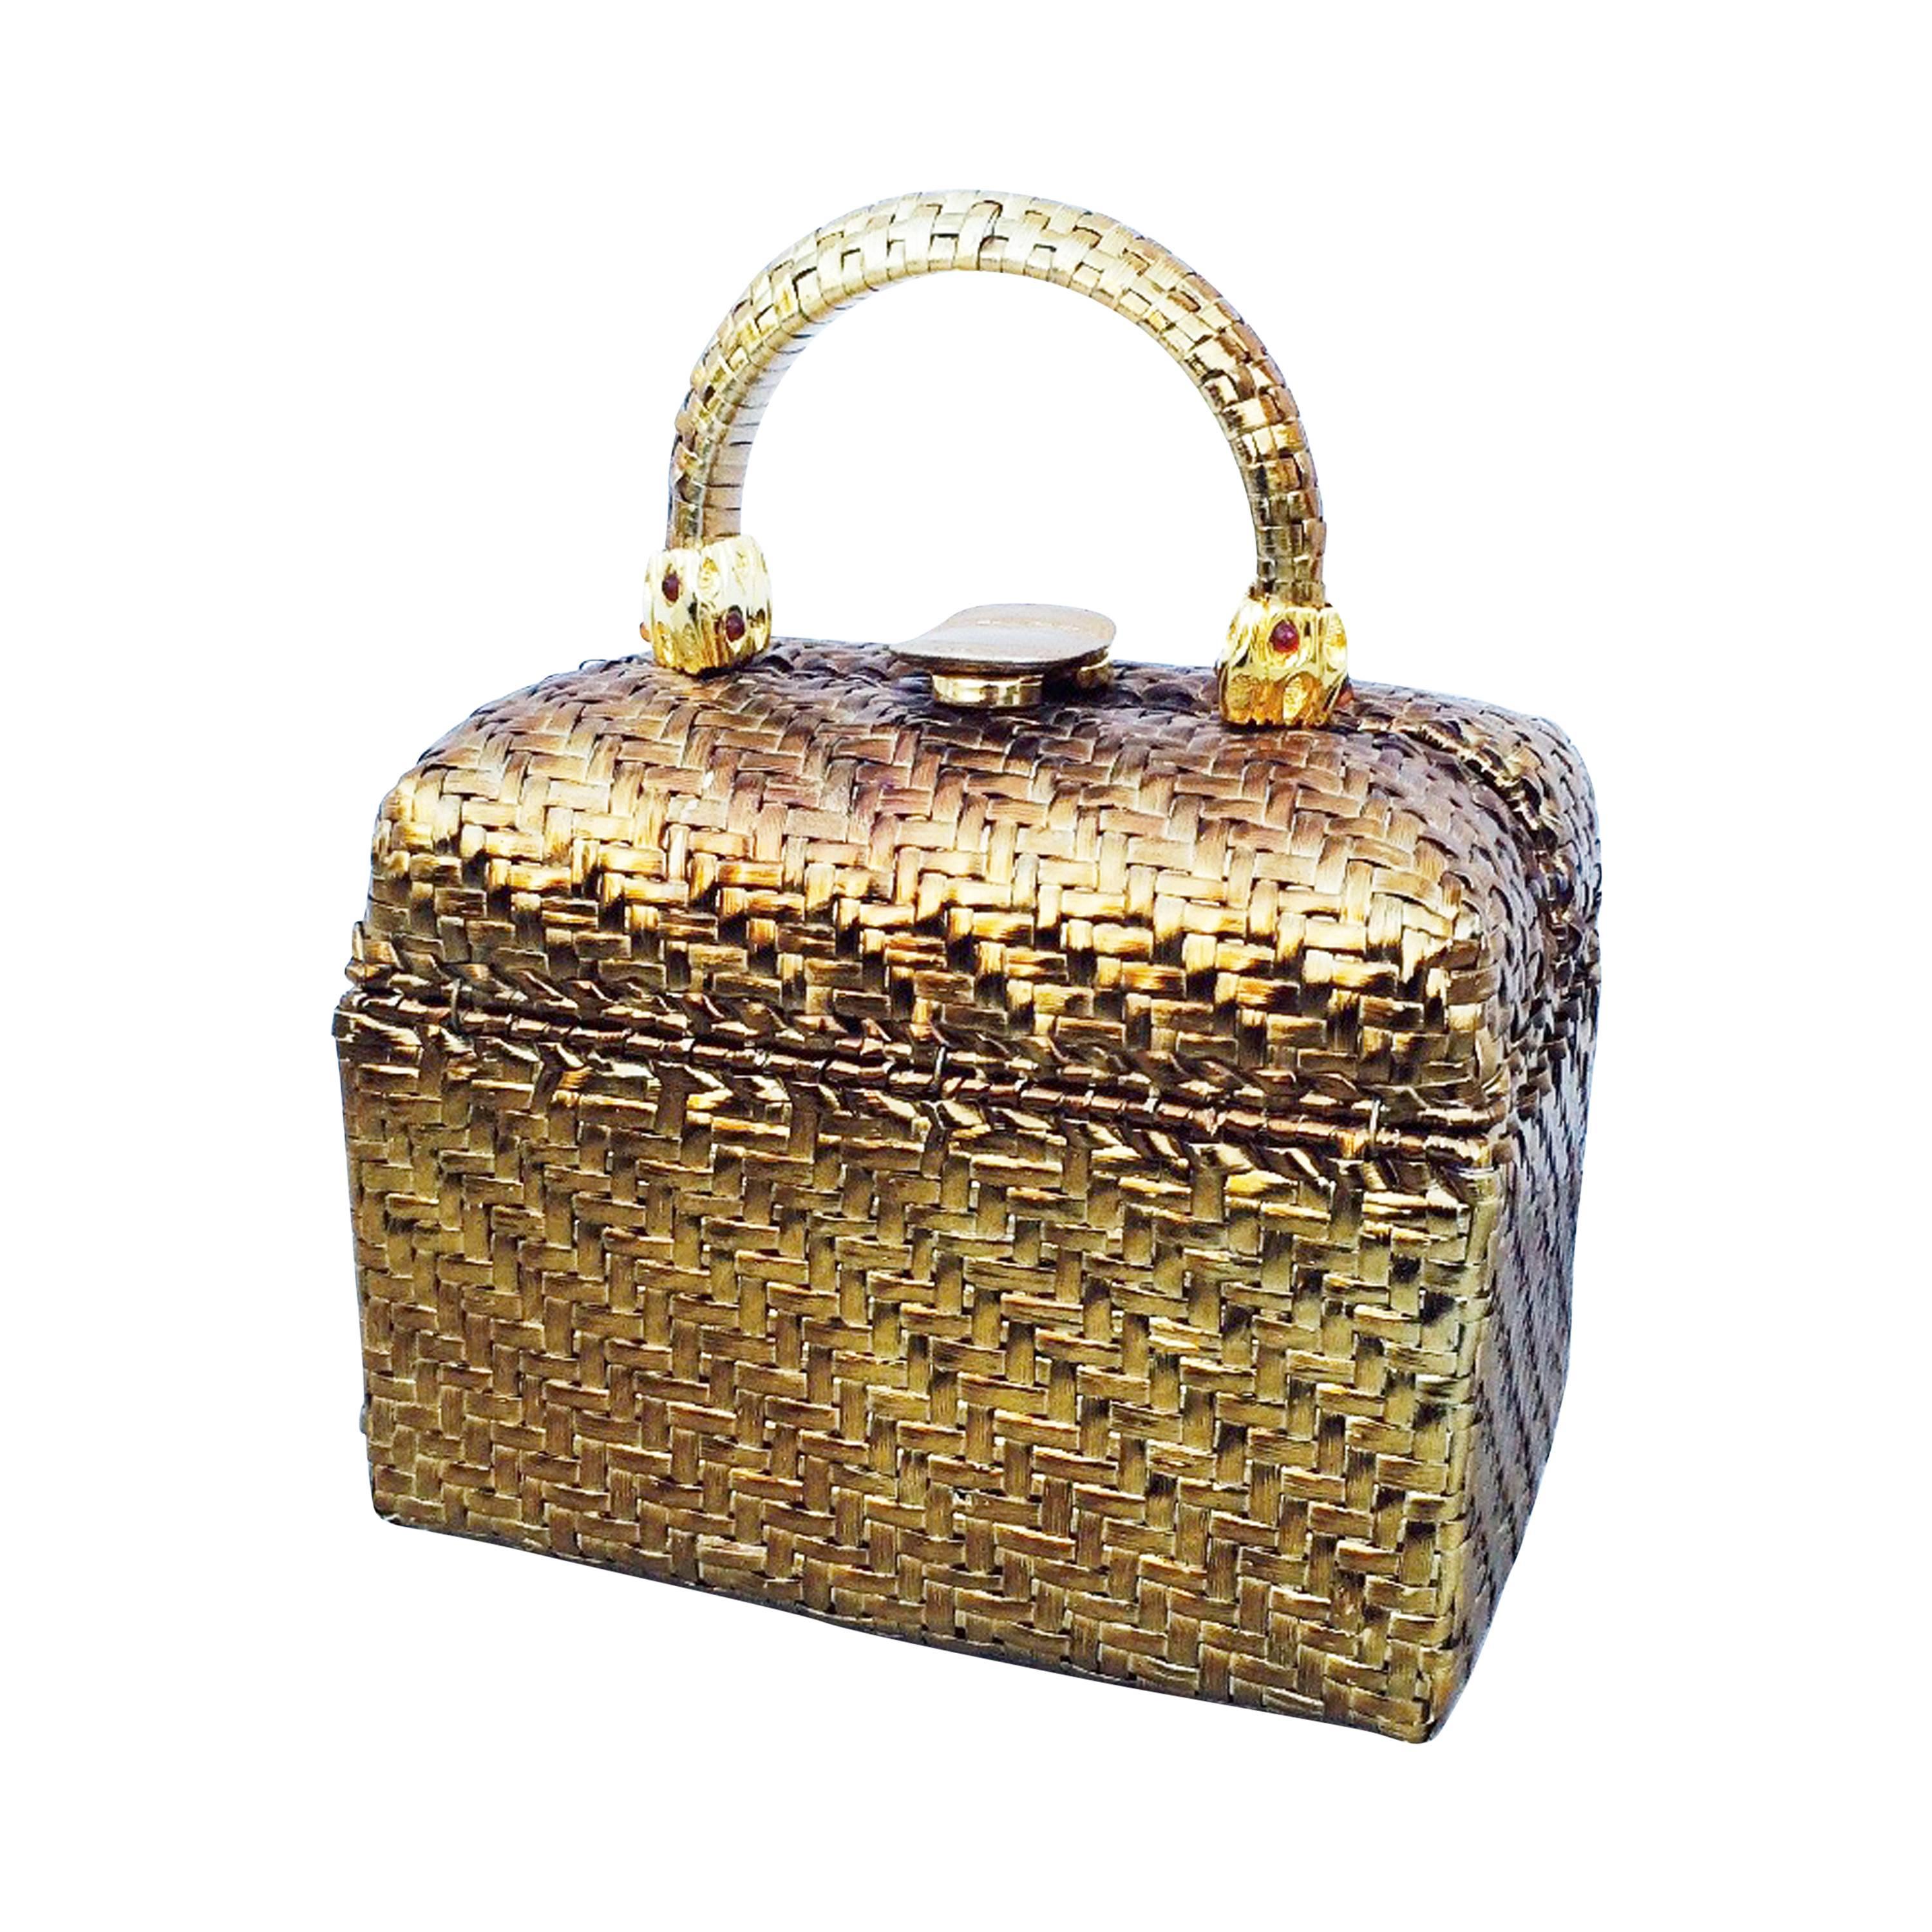 Rodo Gilt Lacquered Wicker Handbag 1970s